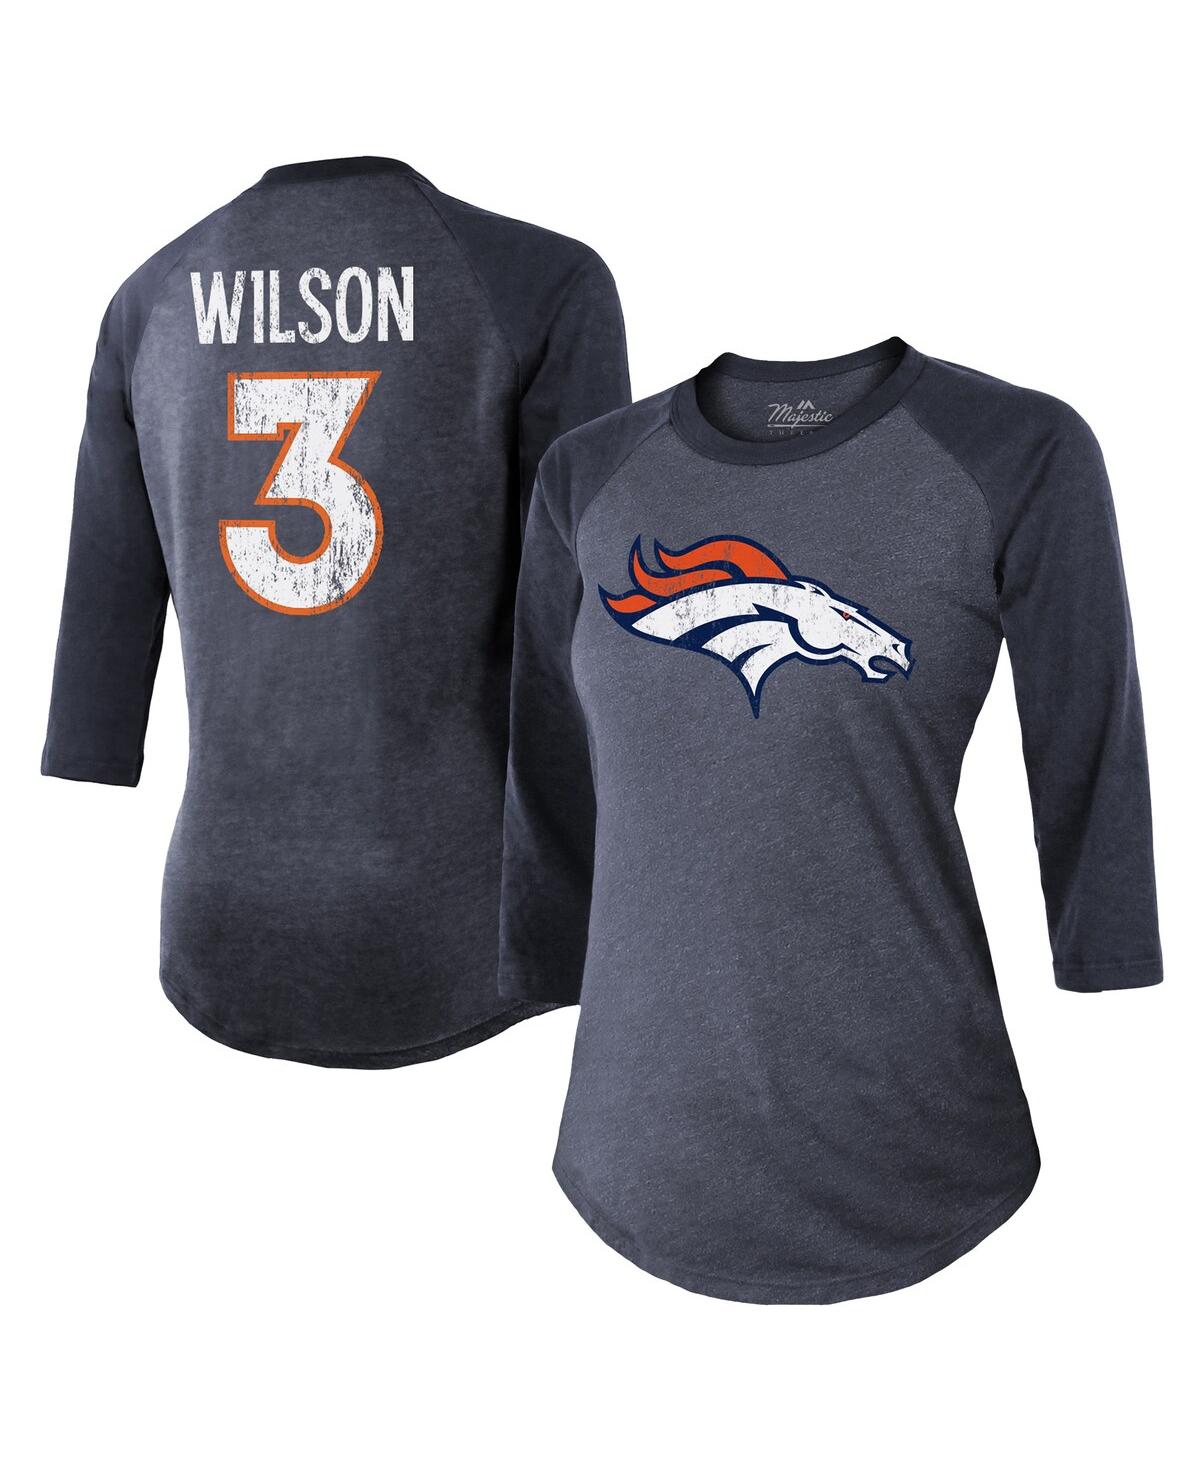 Women's Majestic Threads Russell Wilson Navy Denver Broncos Name & Number Raglan 3/4 Sleeve T-shirt - Navy